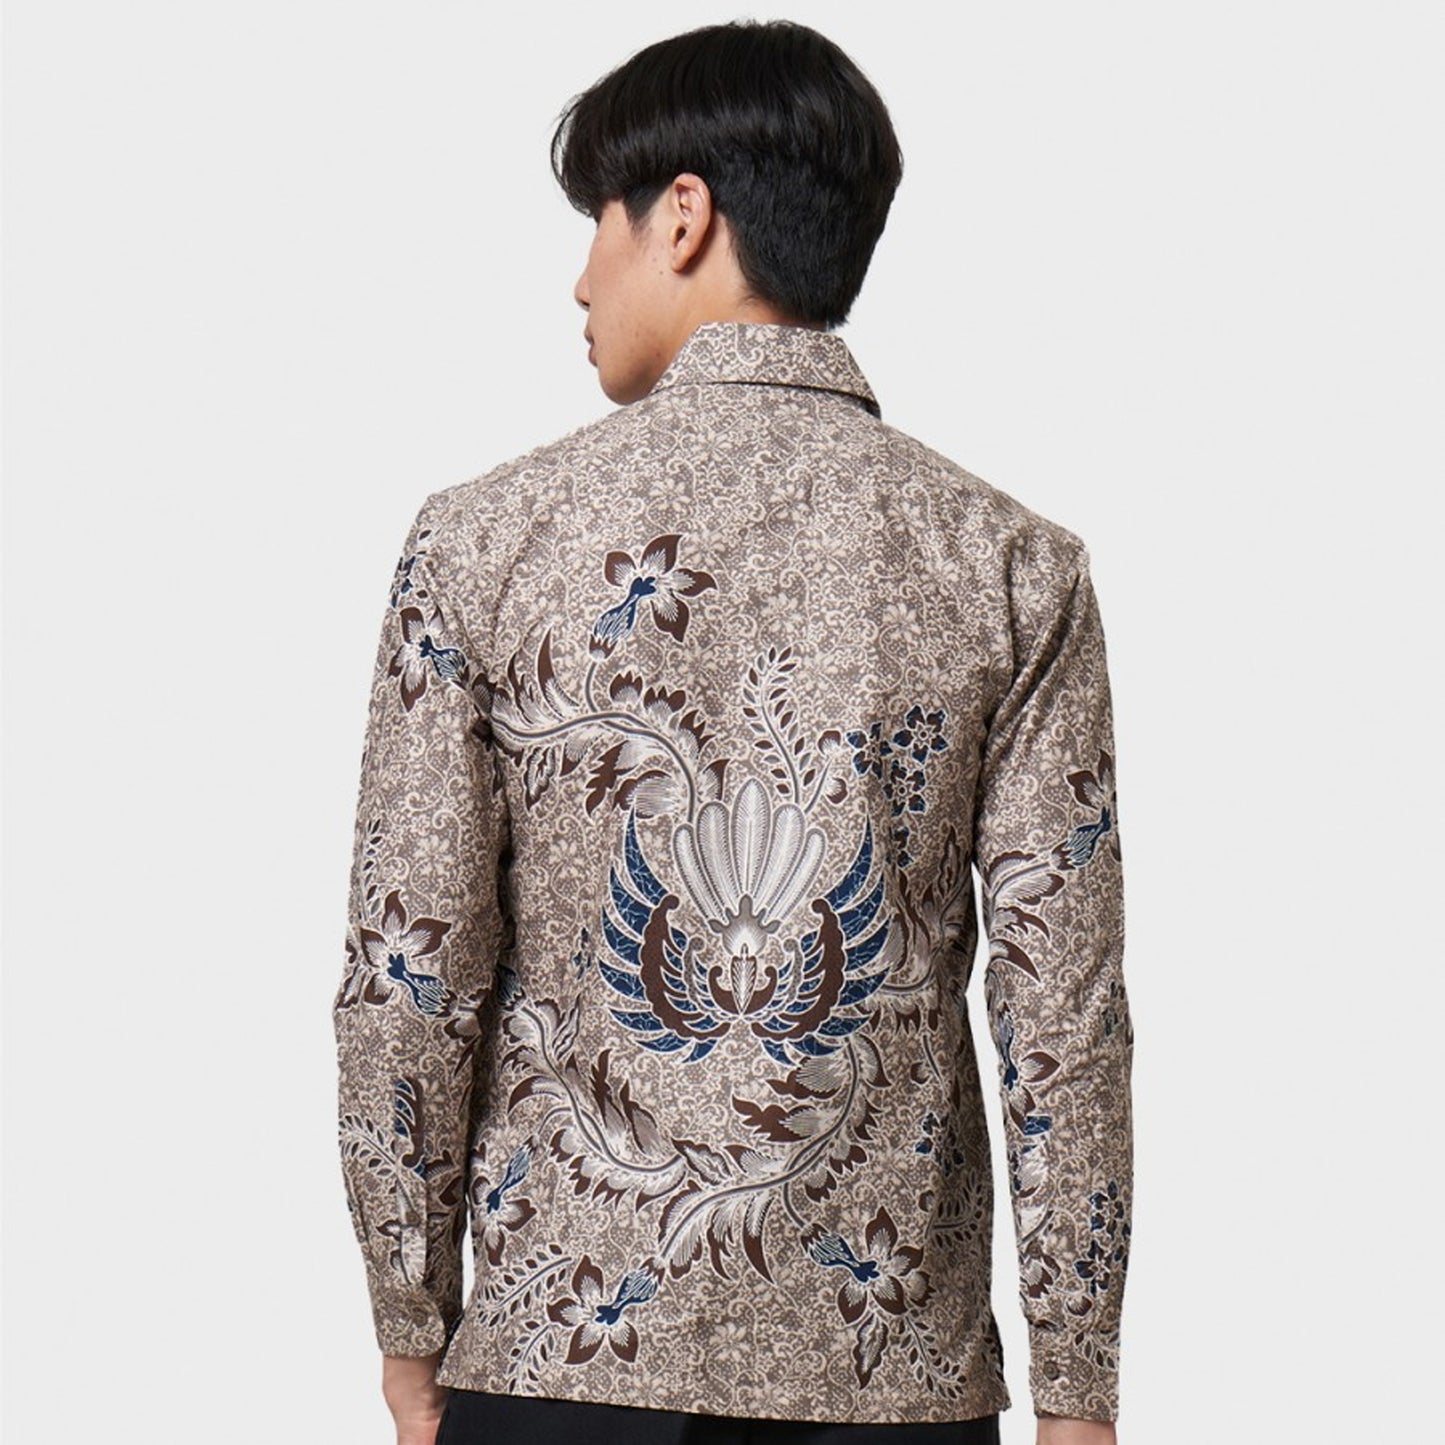 Zeitgenössischer Batik-Stil: Hira Olive Herren-Langarm-Batik-Hemd, stilvolle Herren, Herren-Batik, Batik, Batik-Hemd, formelles Hemd für Männer